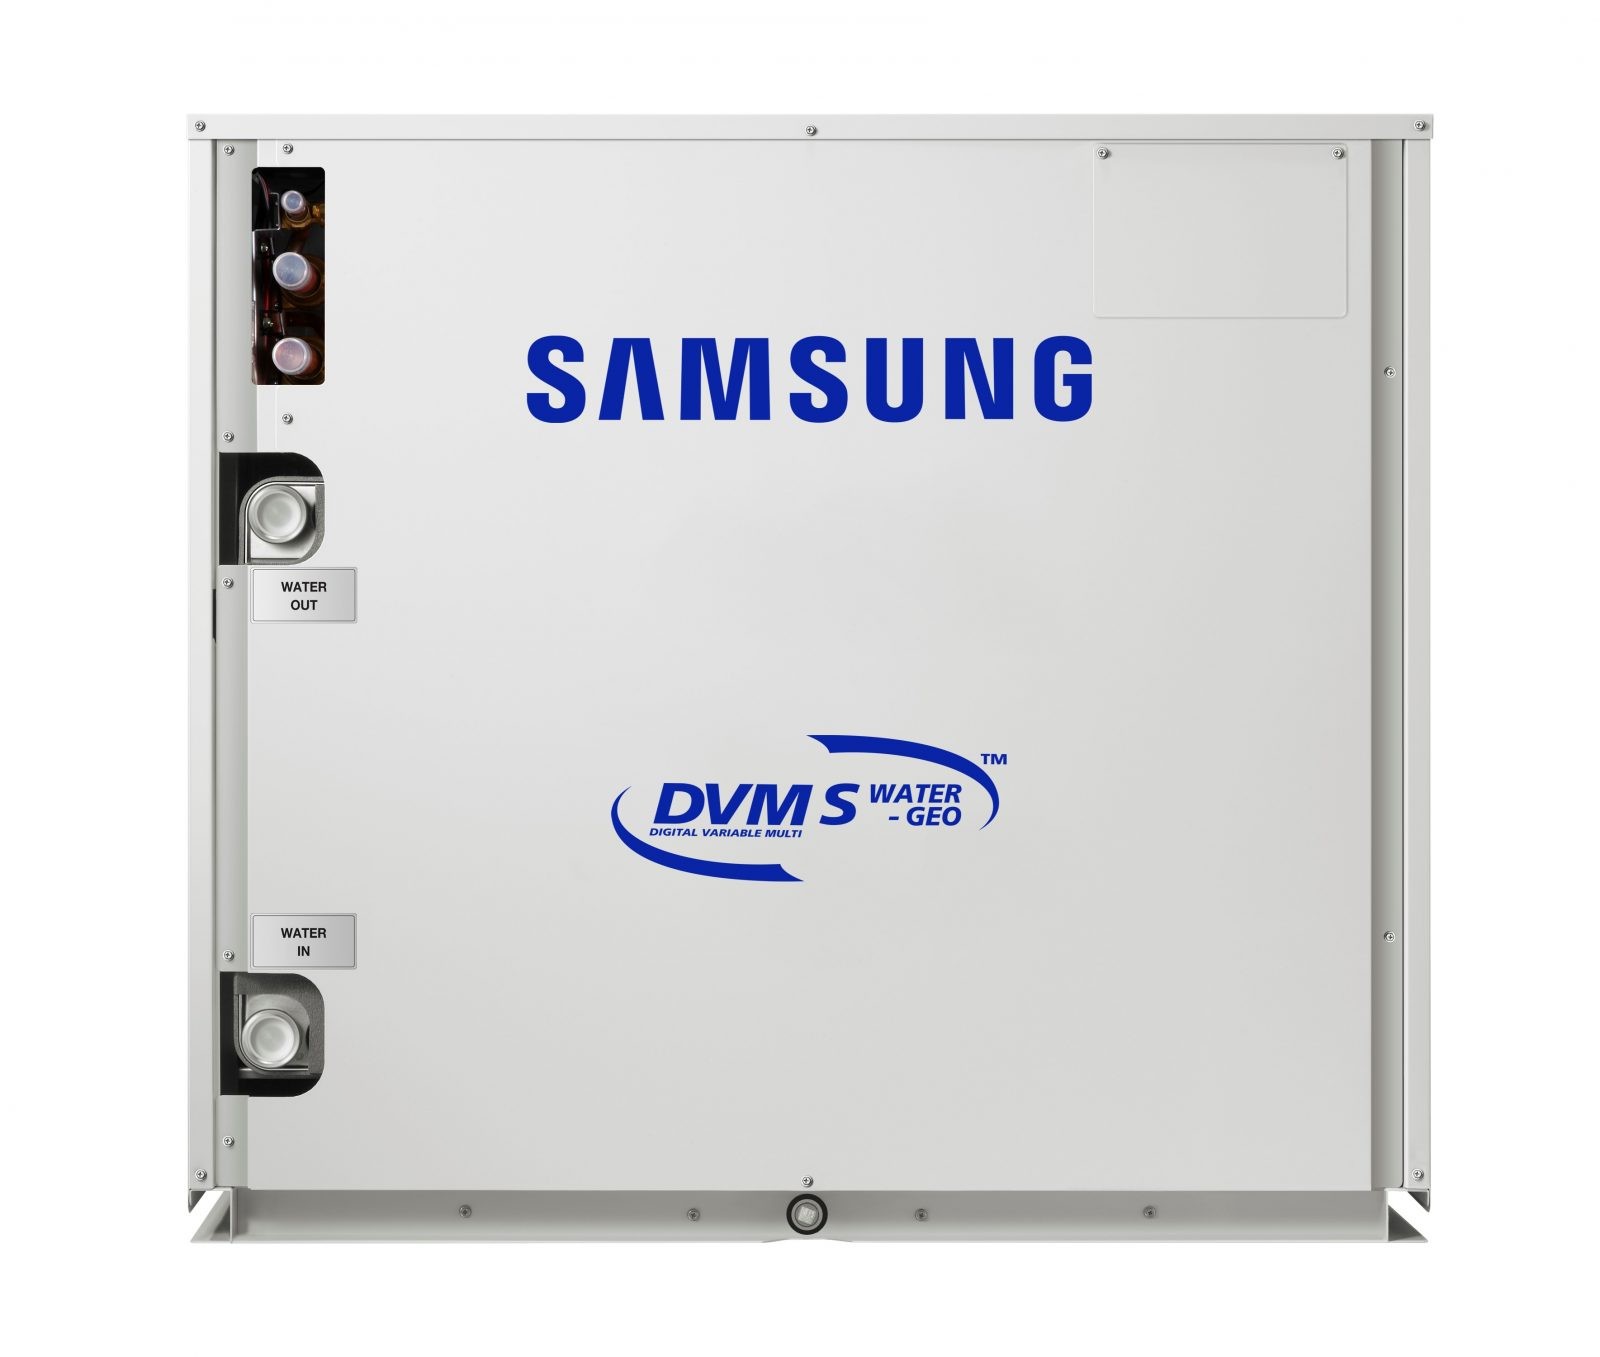 Външно тяло Samsung DVM S Water AM200MXWANR